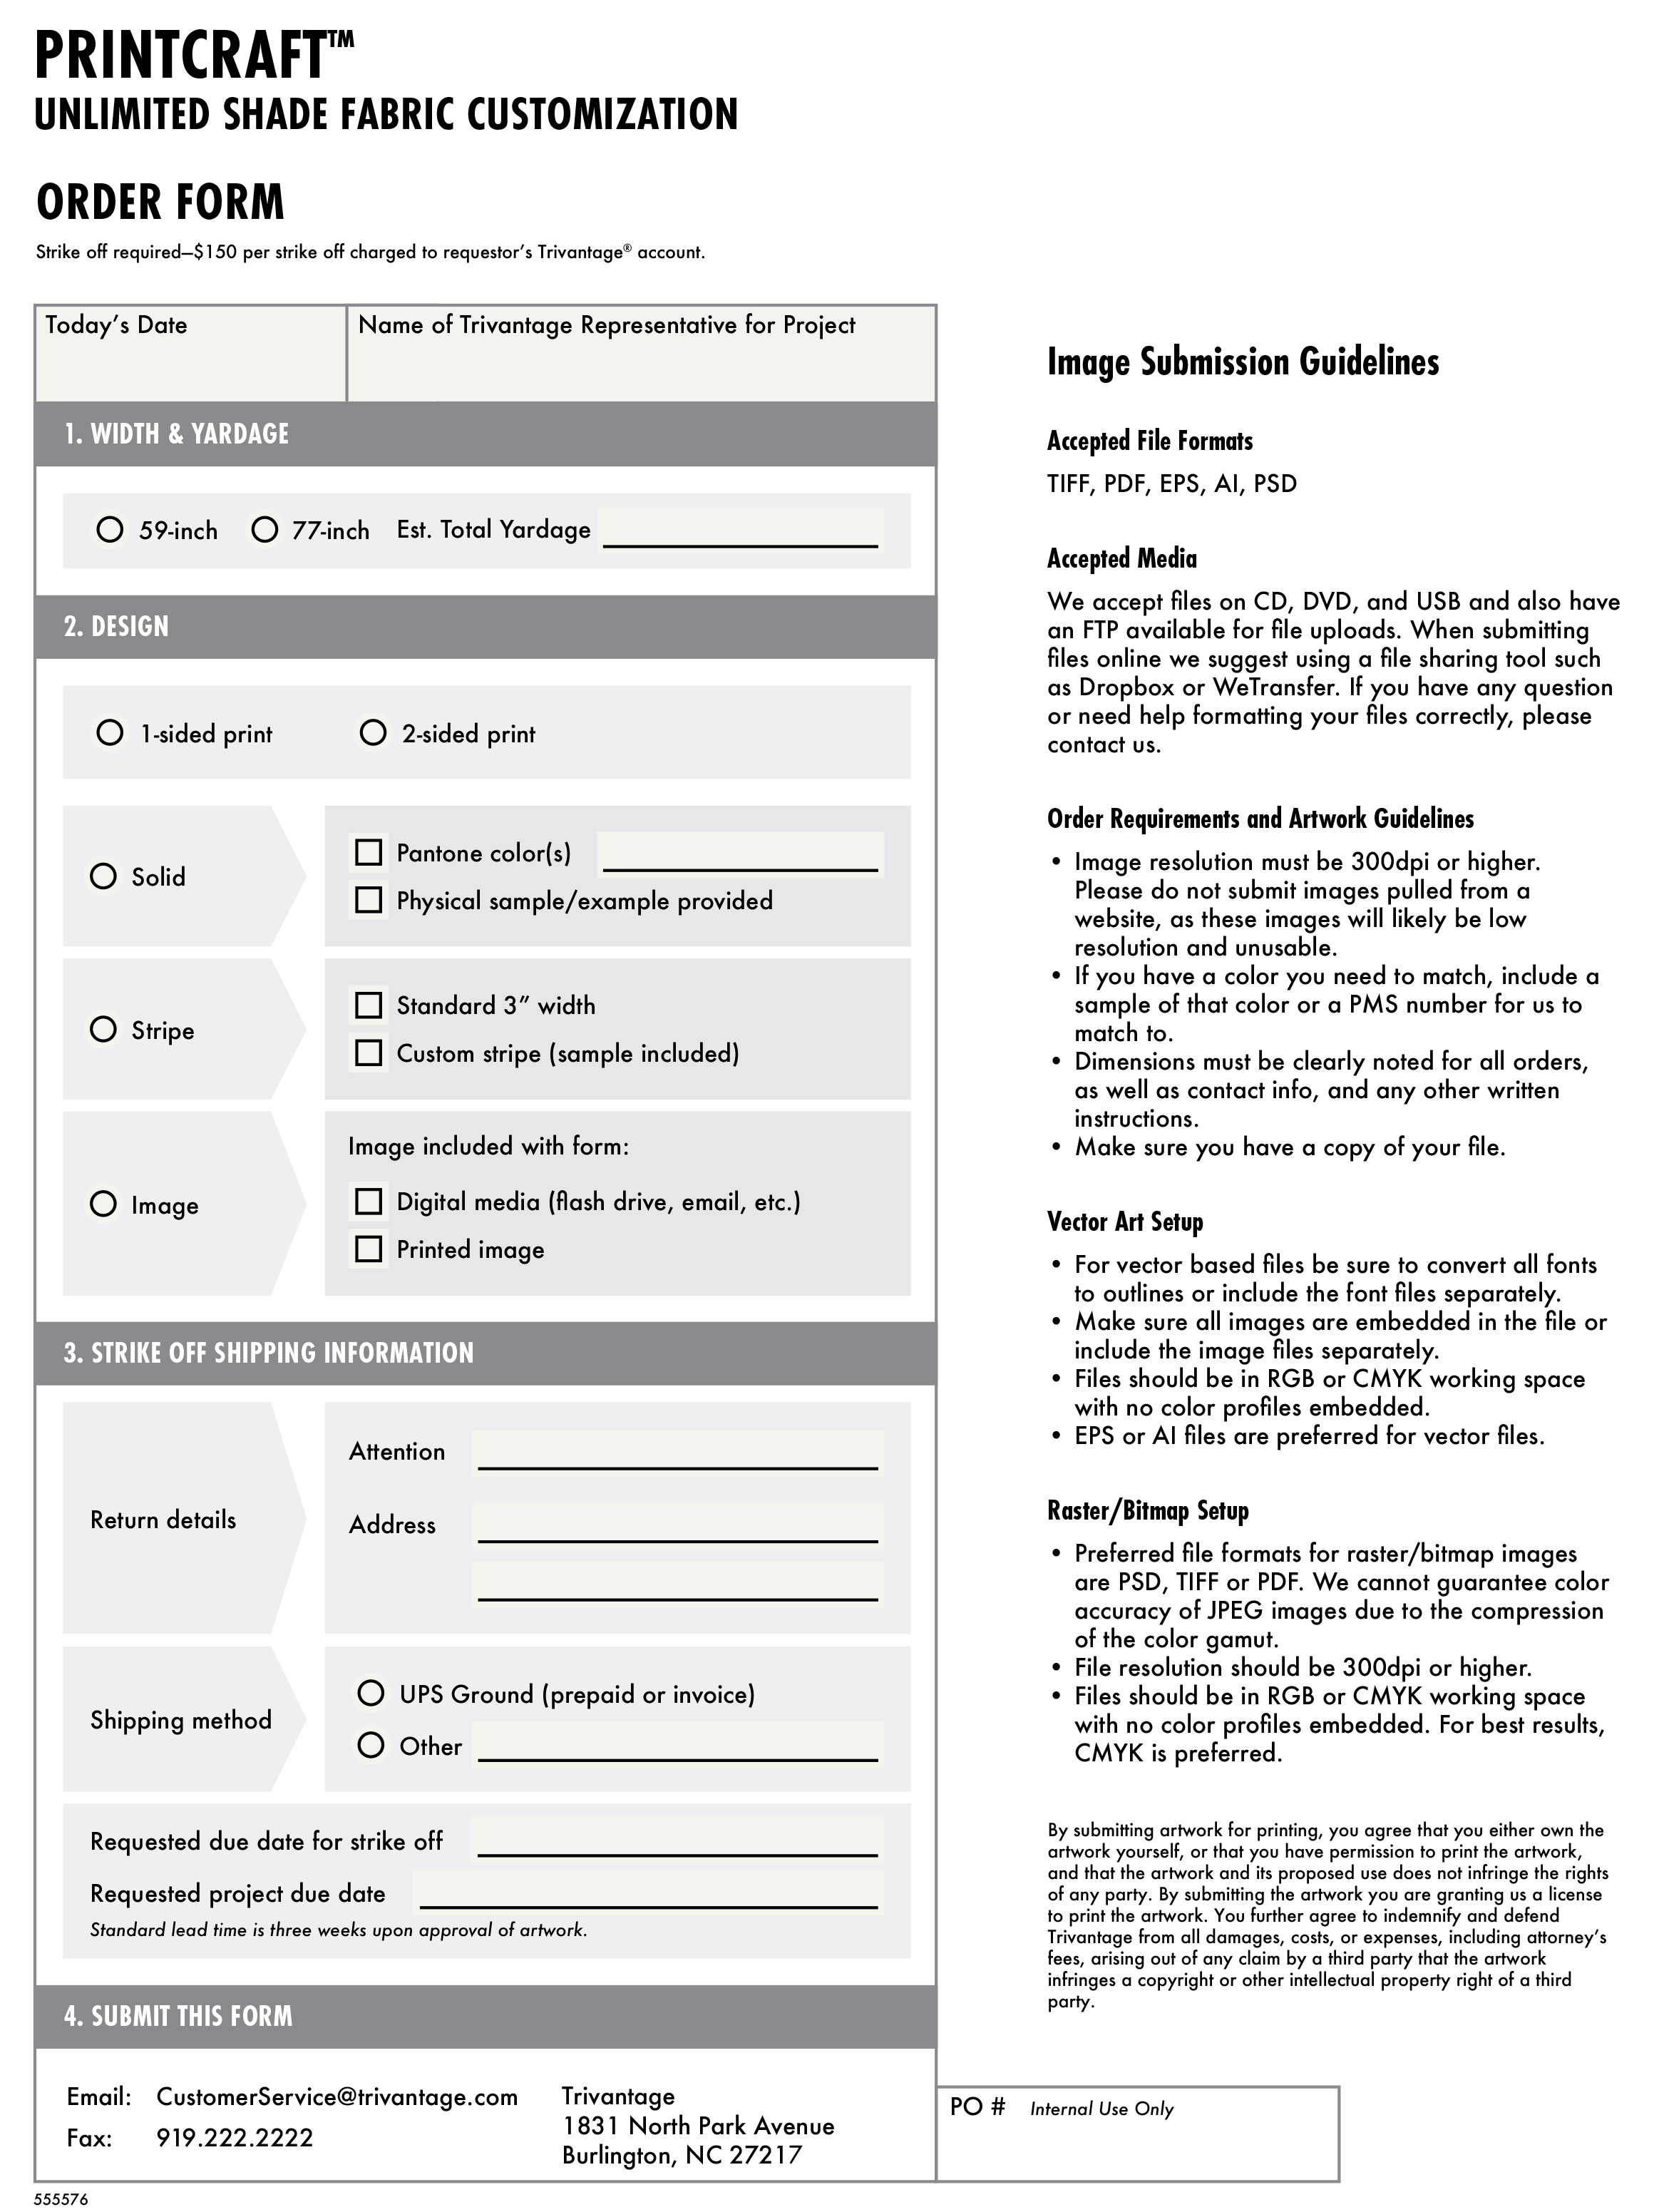 Customization order form sheet with the Printcraft logo